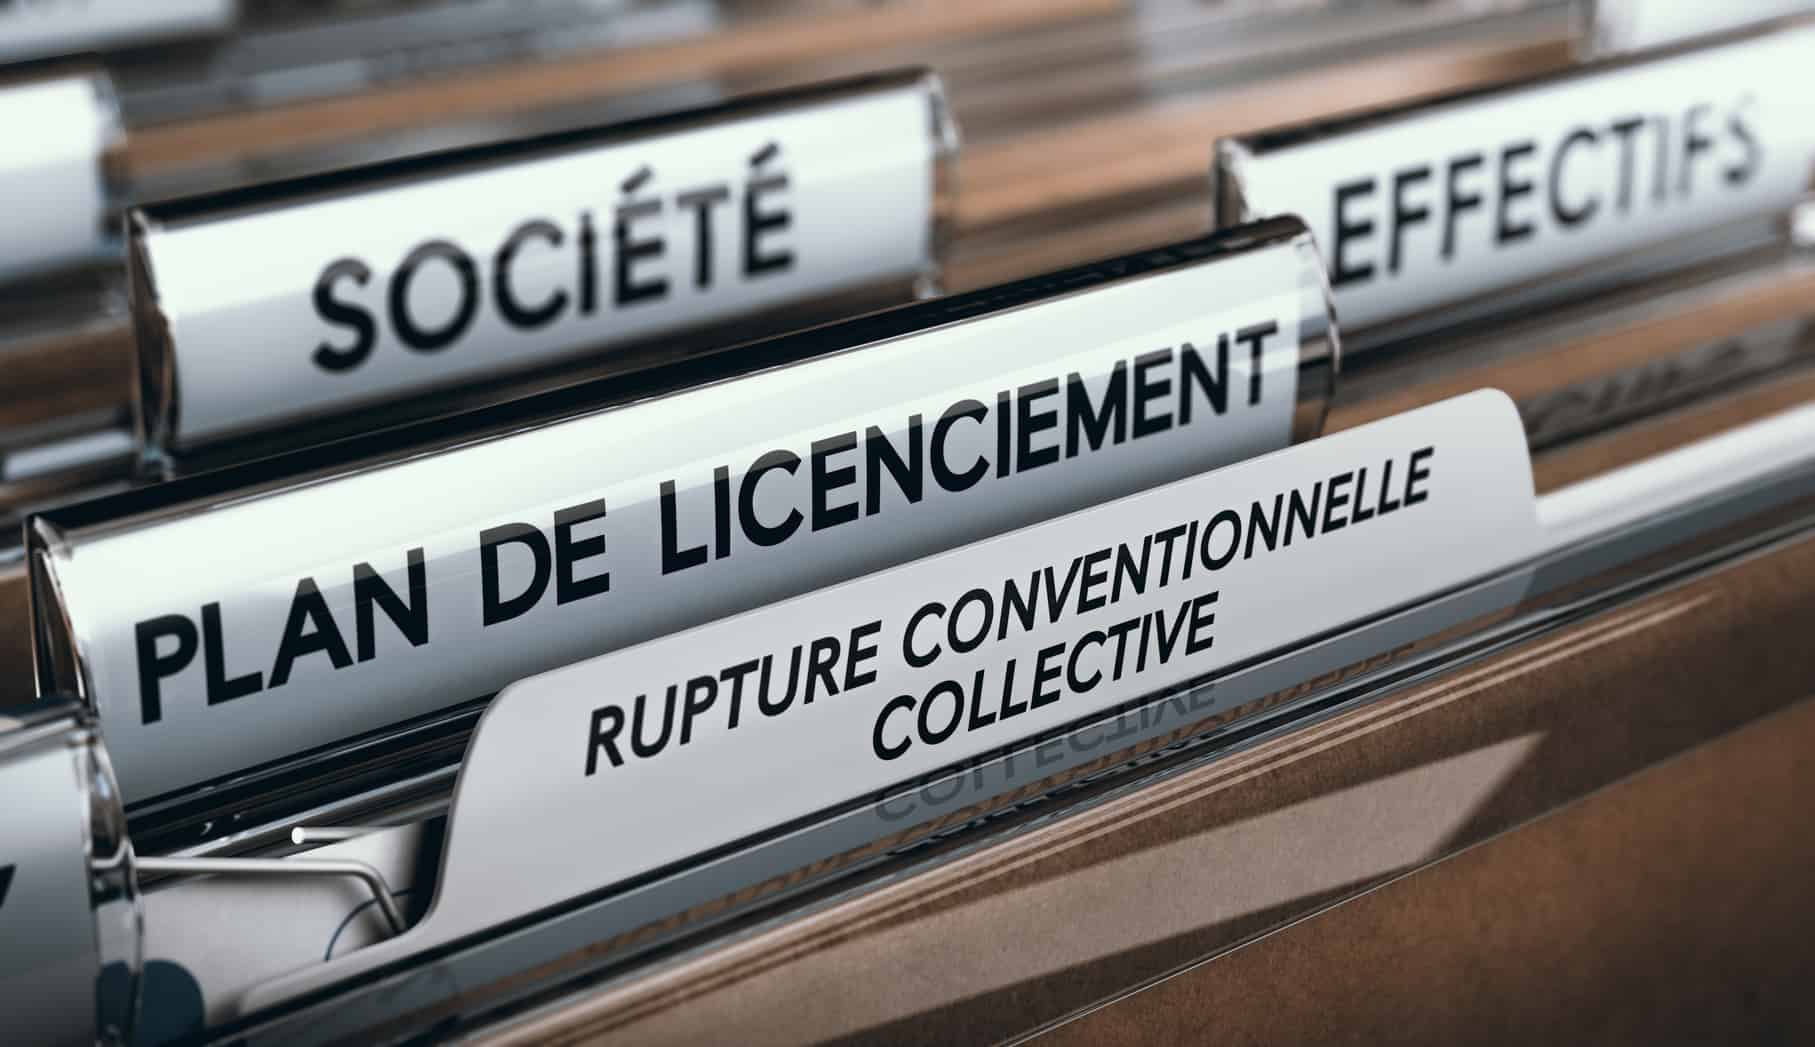 RCC, Rupture Conventionnelle Collective